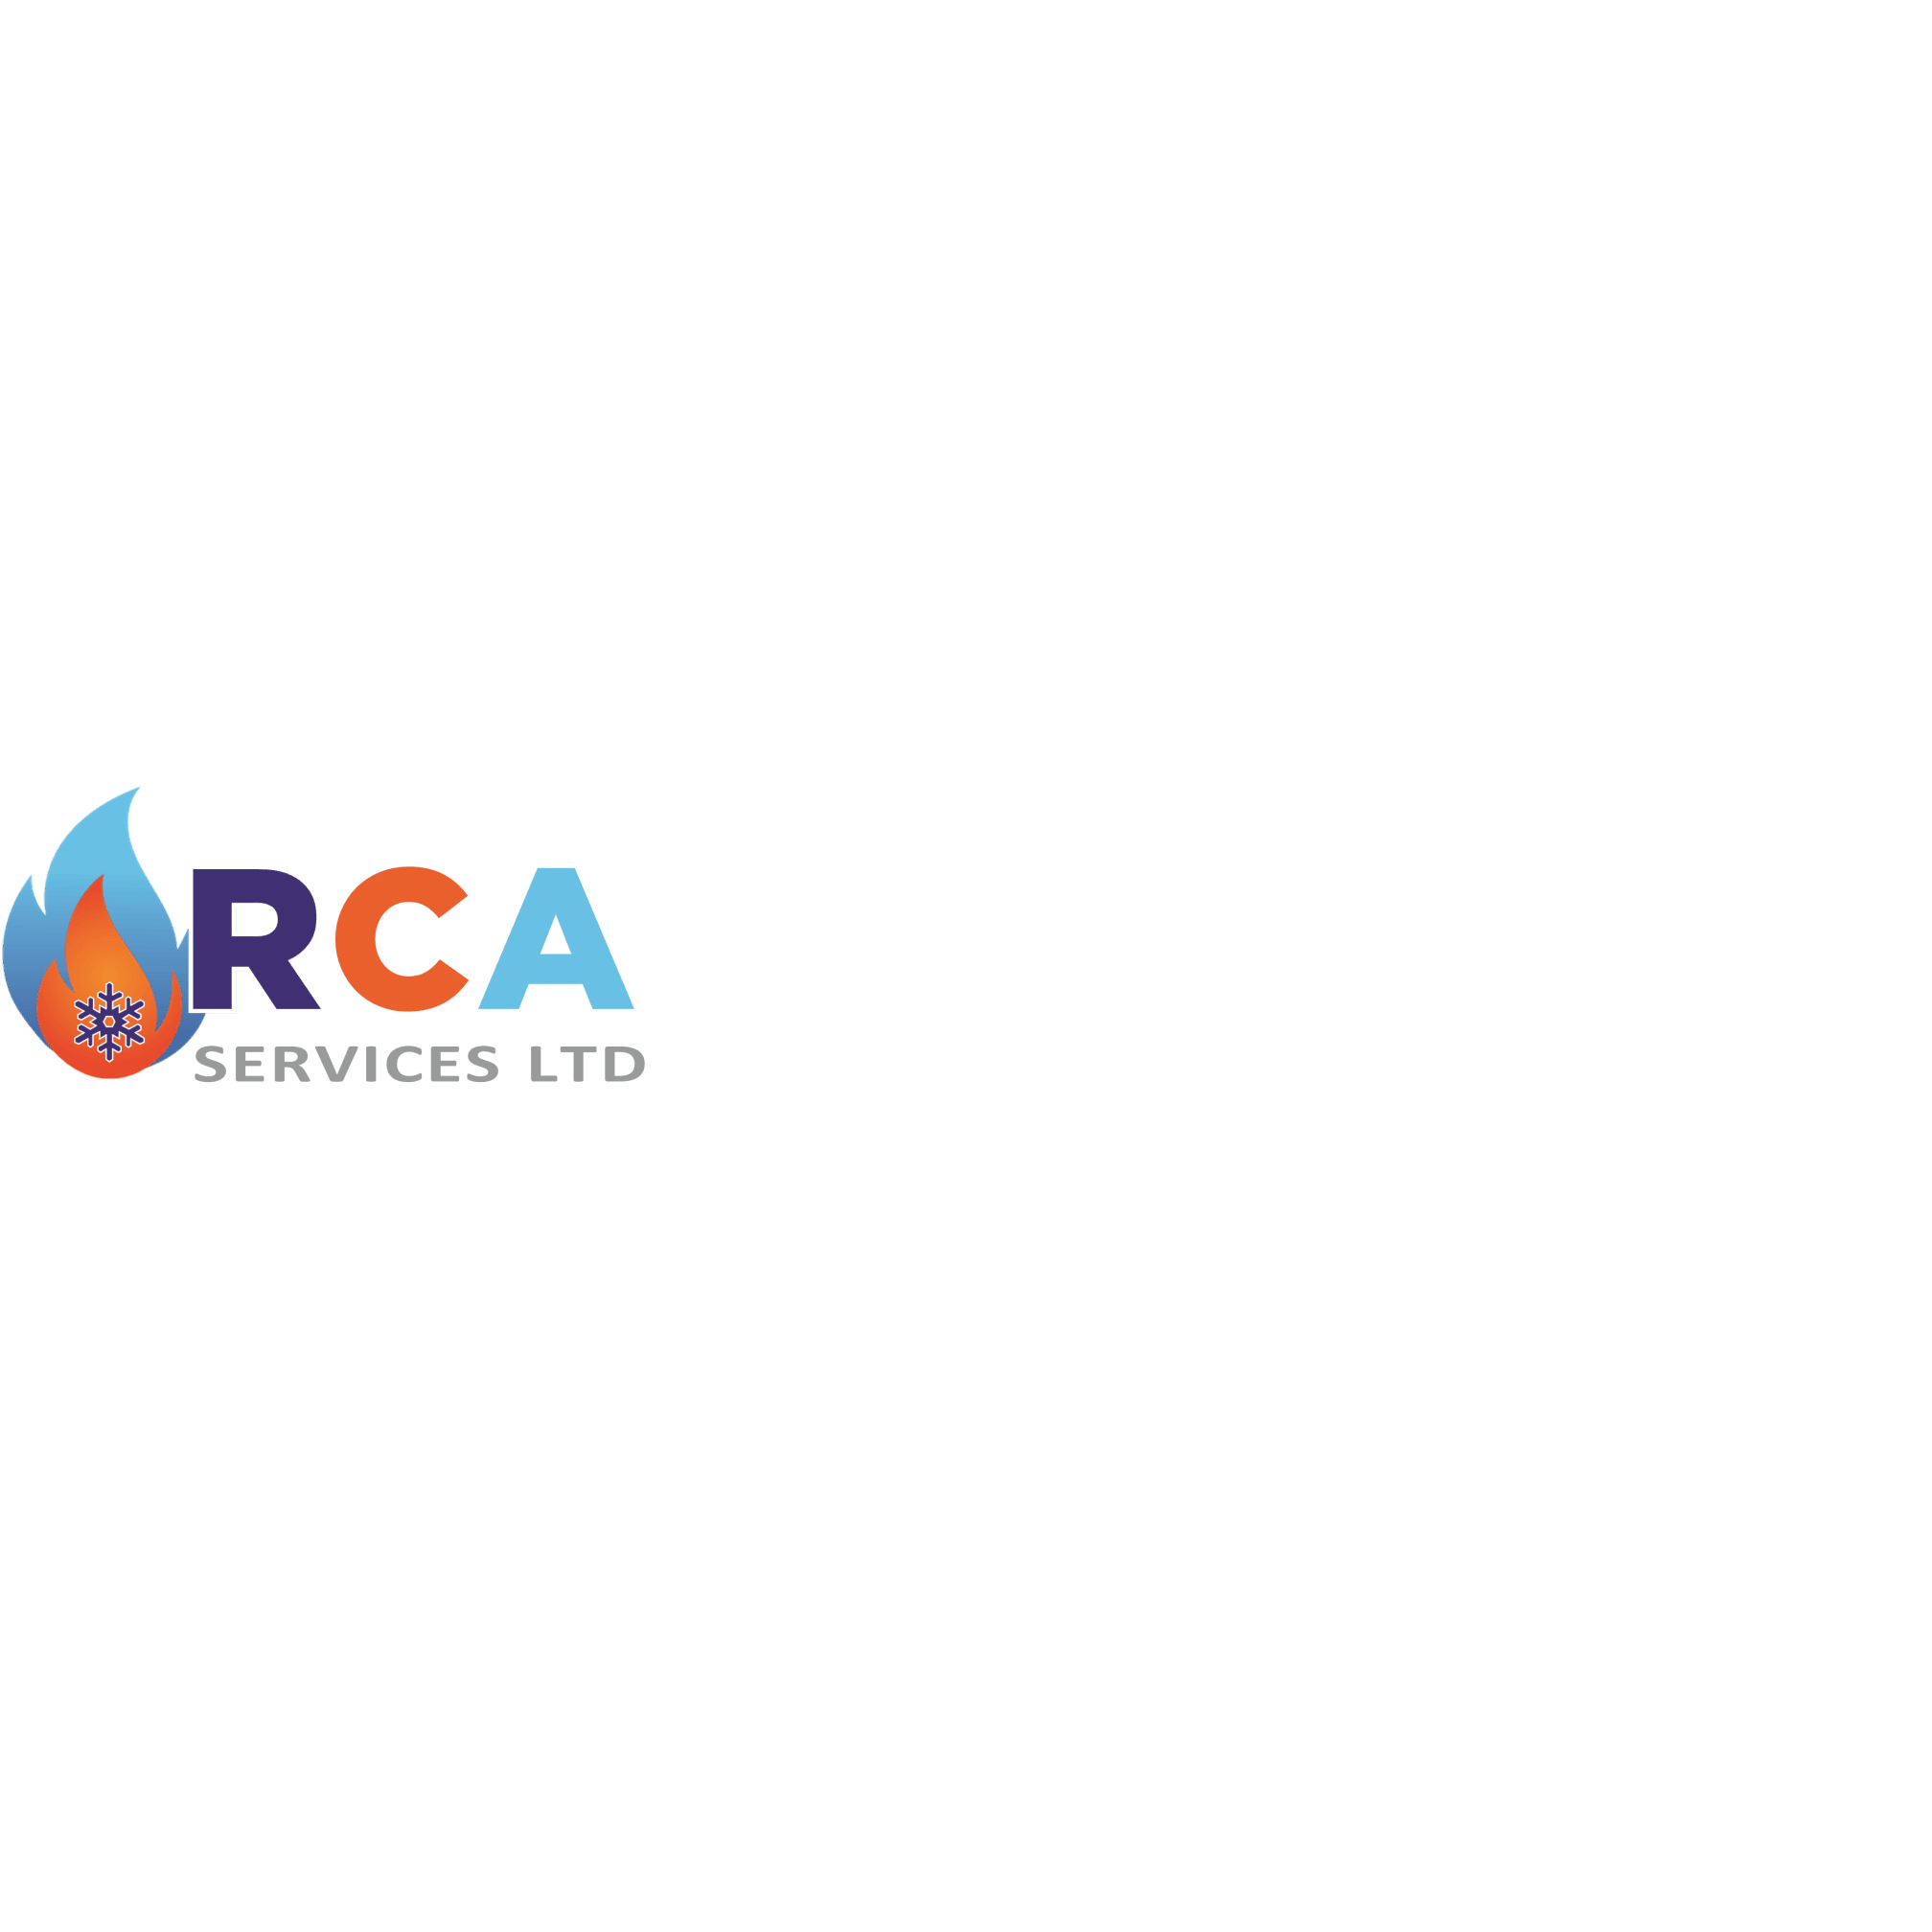 RCA Services Ltd Logo